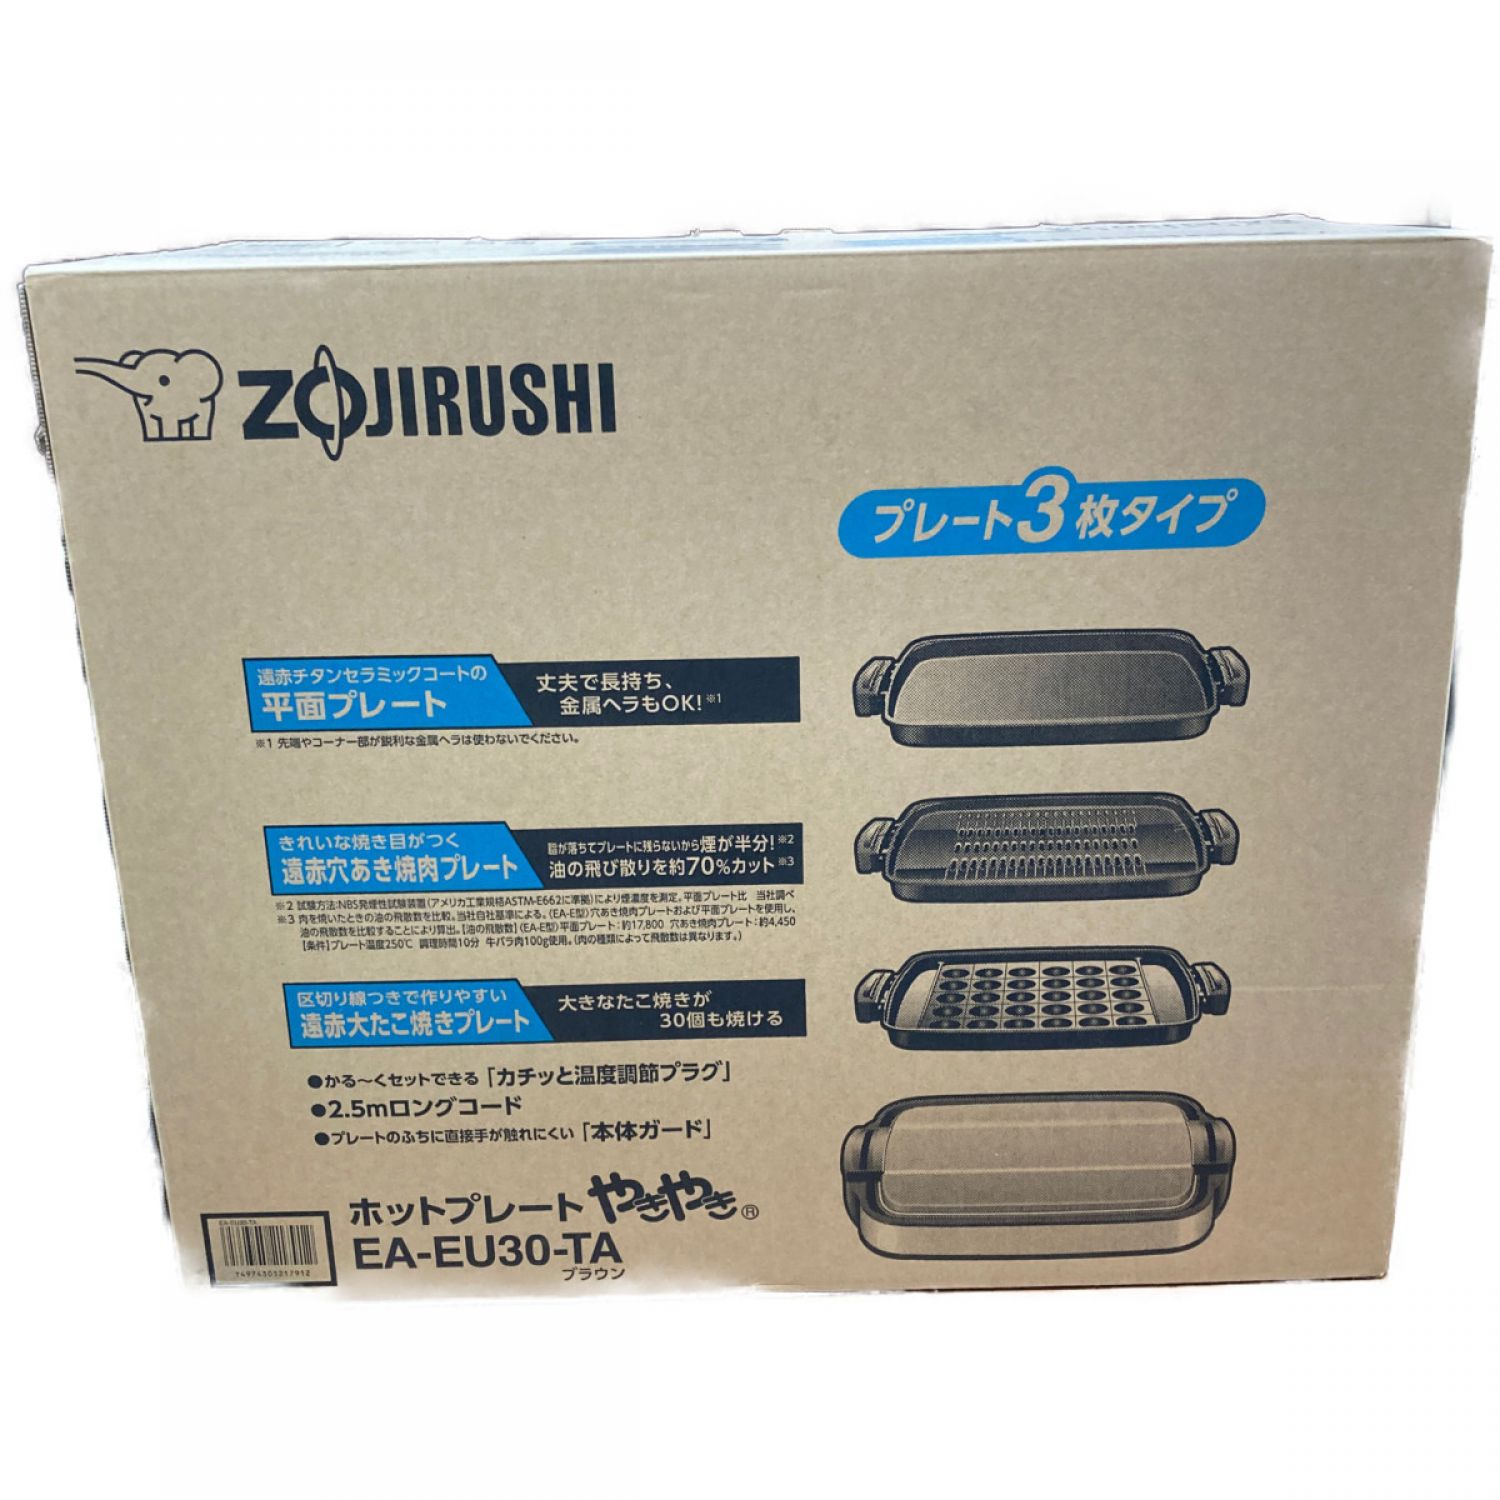 ZOJIRUSHI CORPORATION 象印 ホットプレート やきやき EA-EU30-TA Aランク